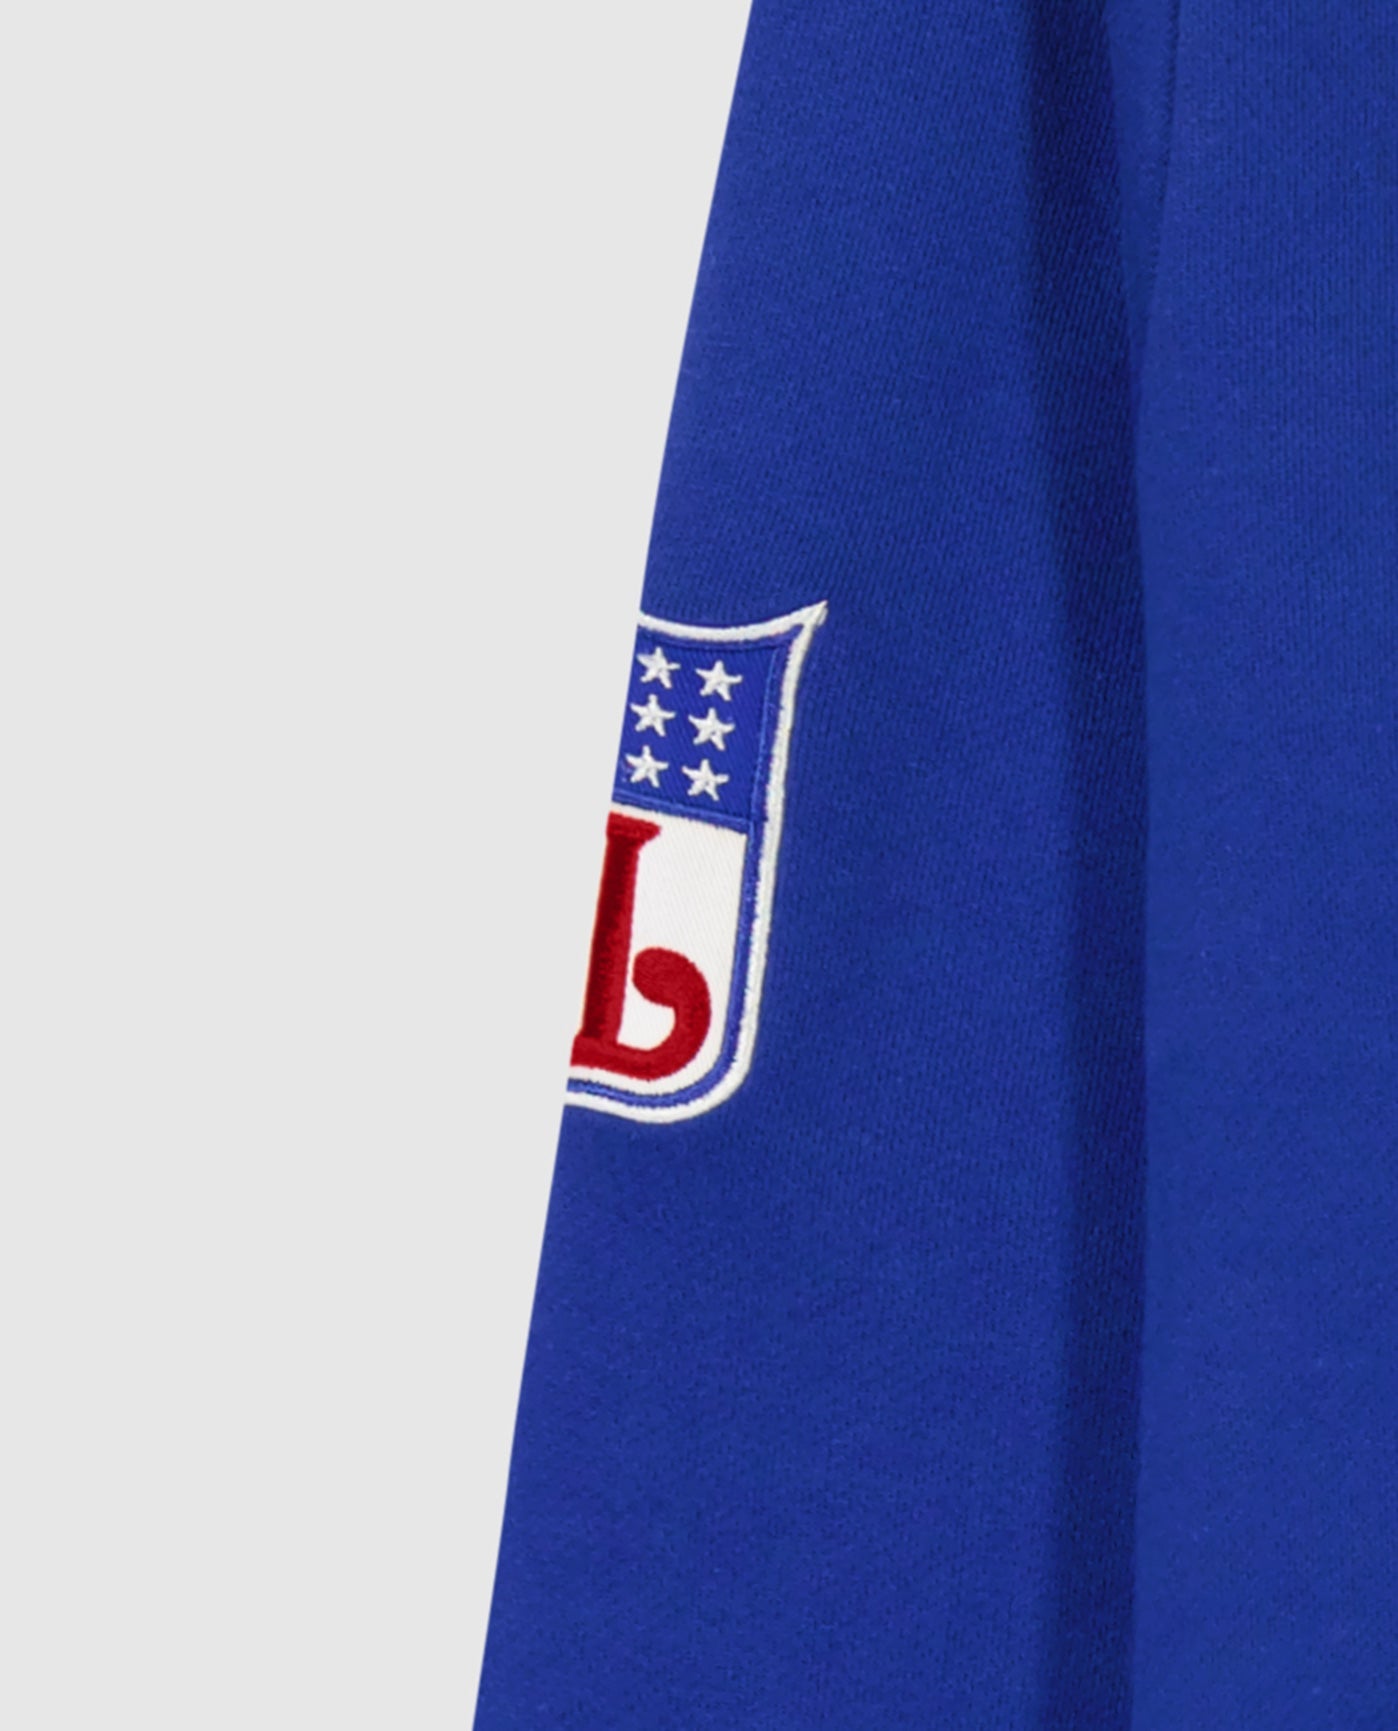 NFL Logo on Sleeve | Patriots Blue